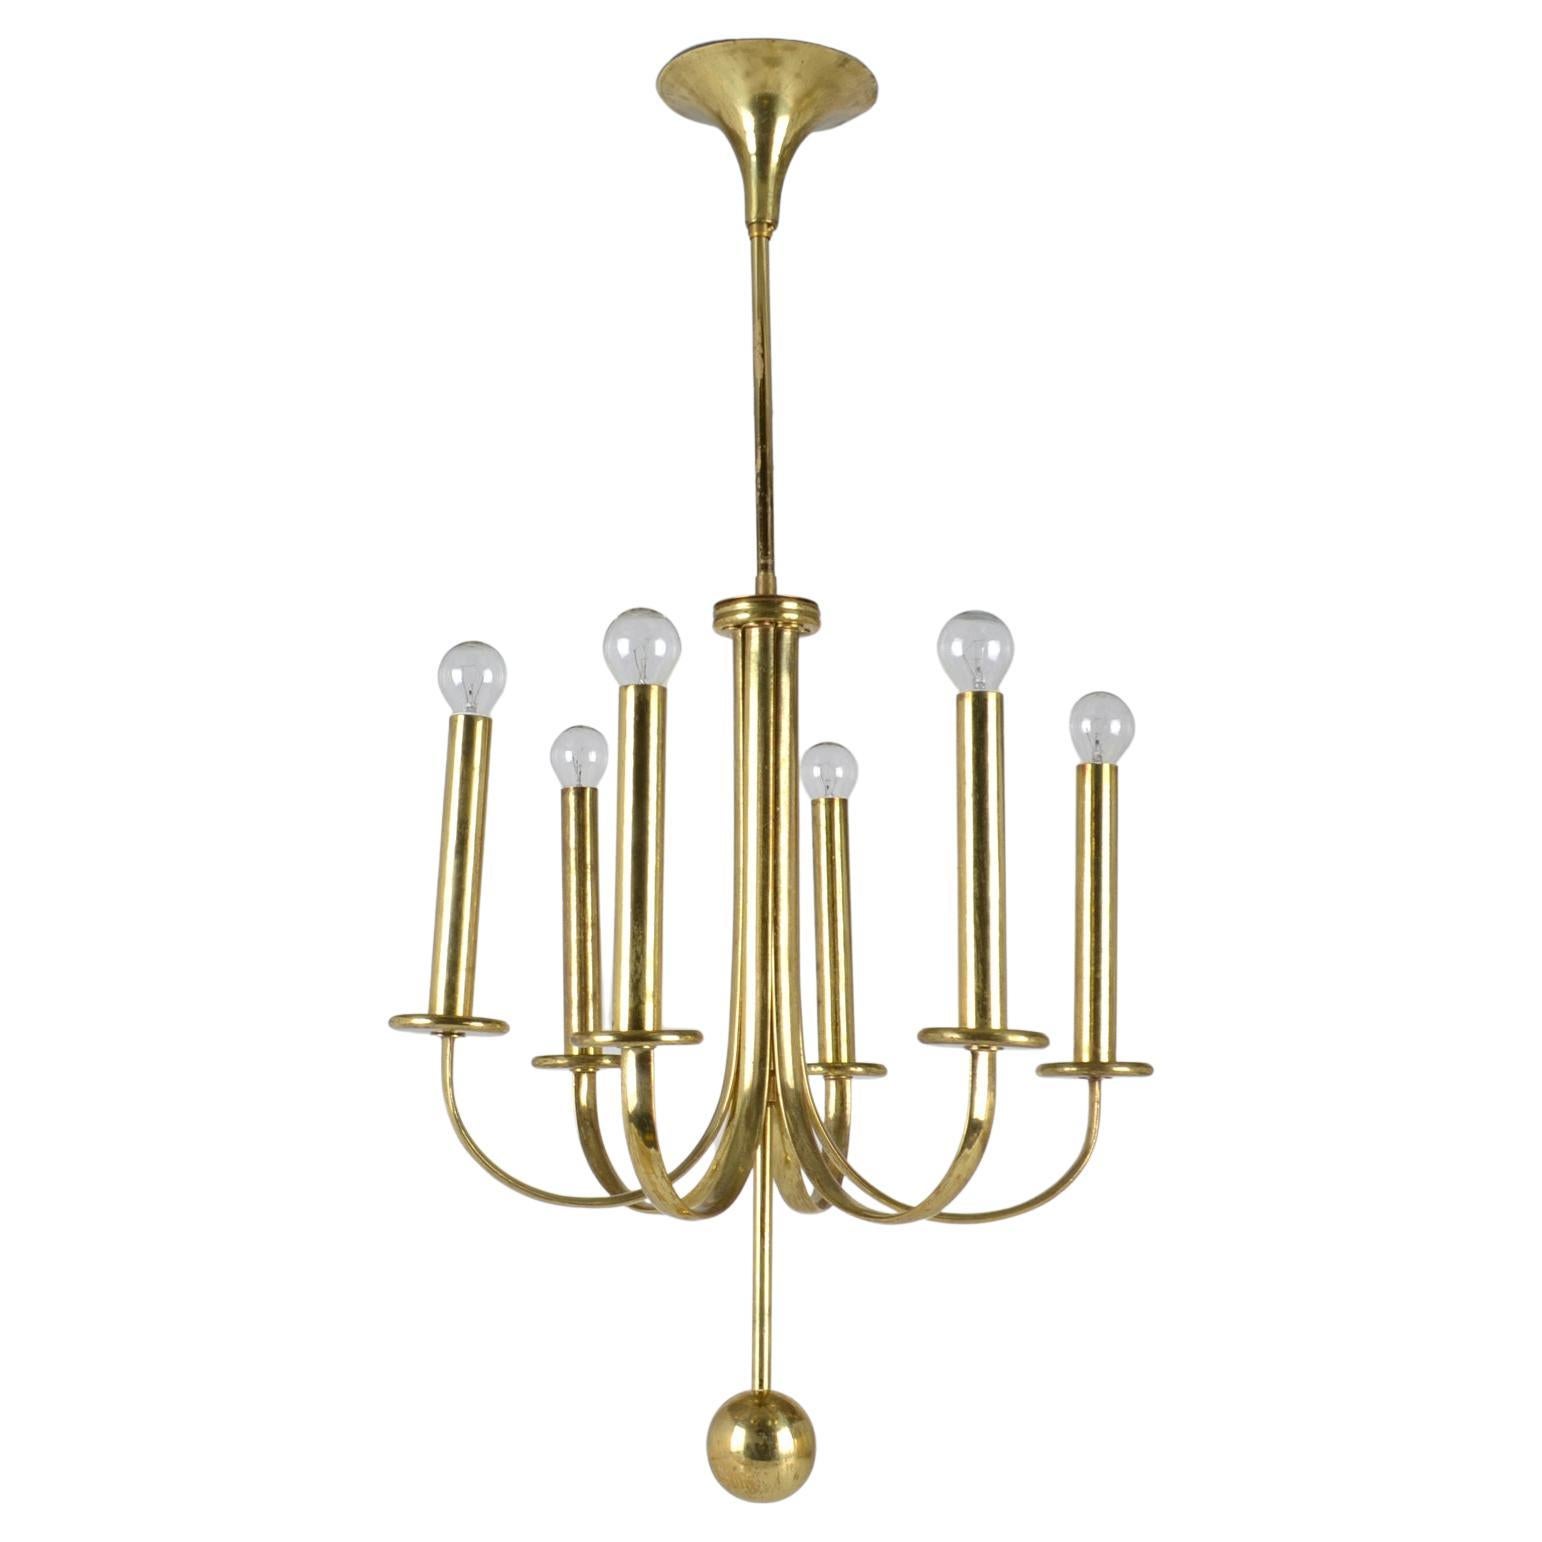 Elegant brass six arm chandelier with minimal contours and original patina.